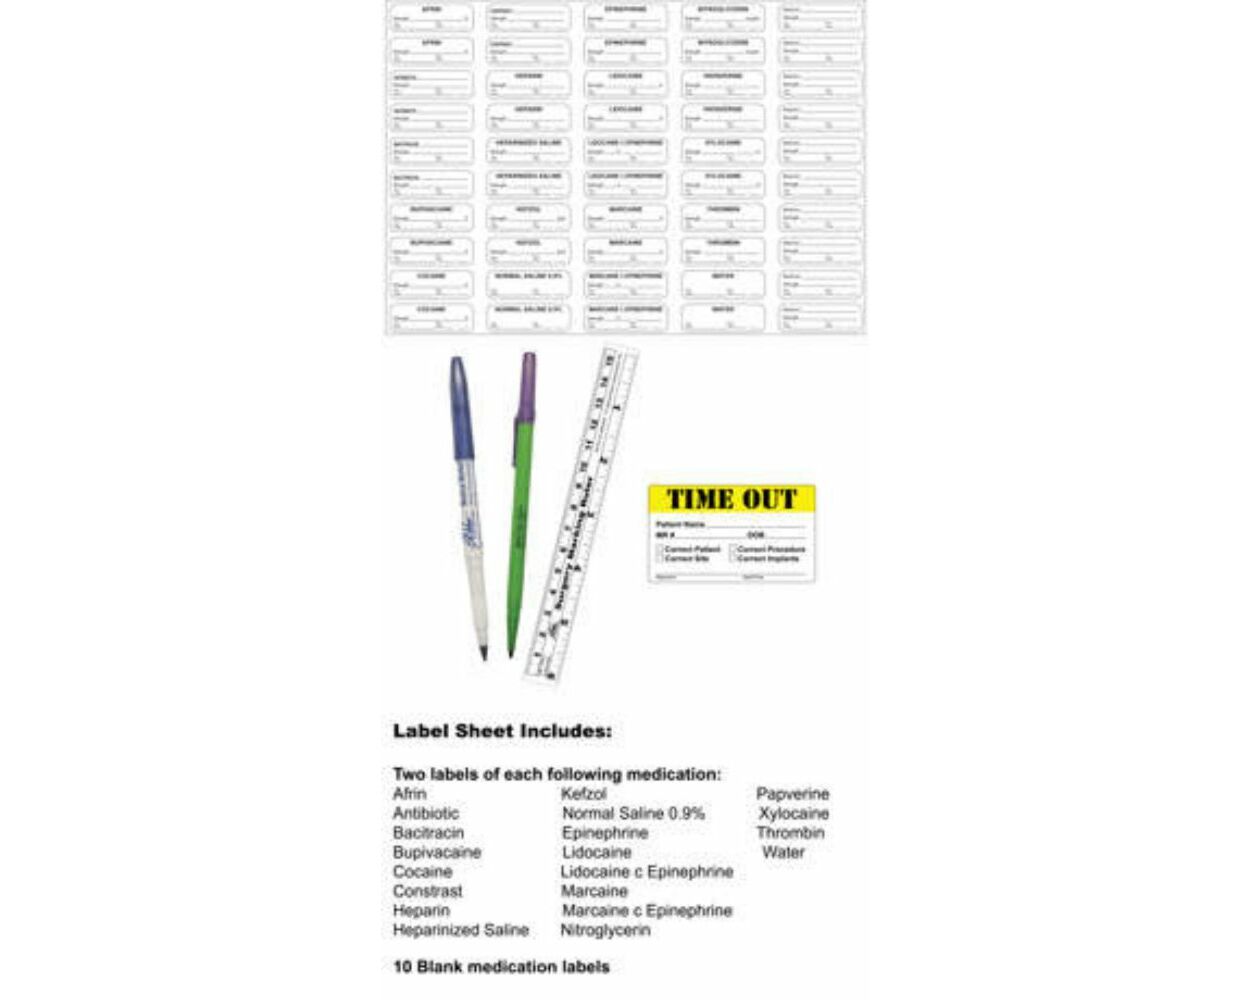 Sterile Skin Marking Pen - PDC (7042-16-PDM)